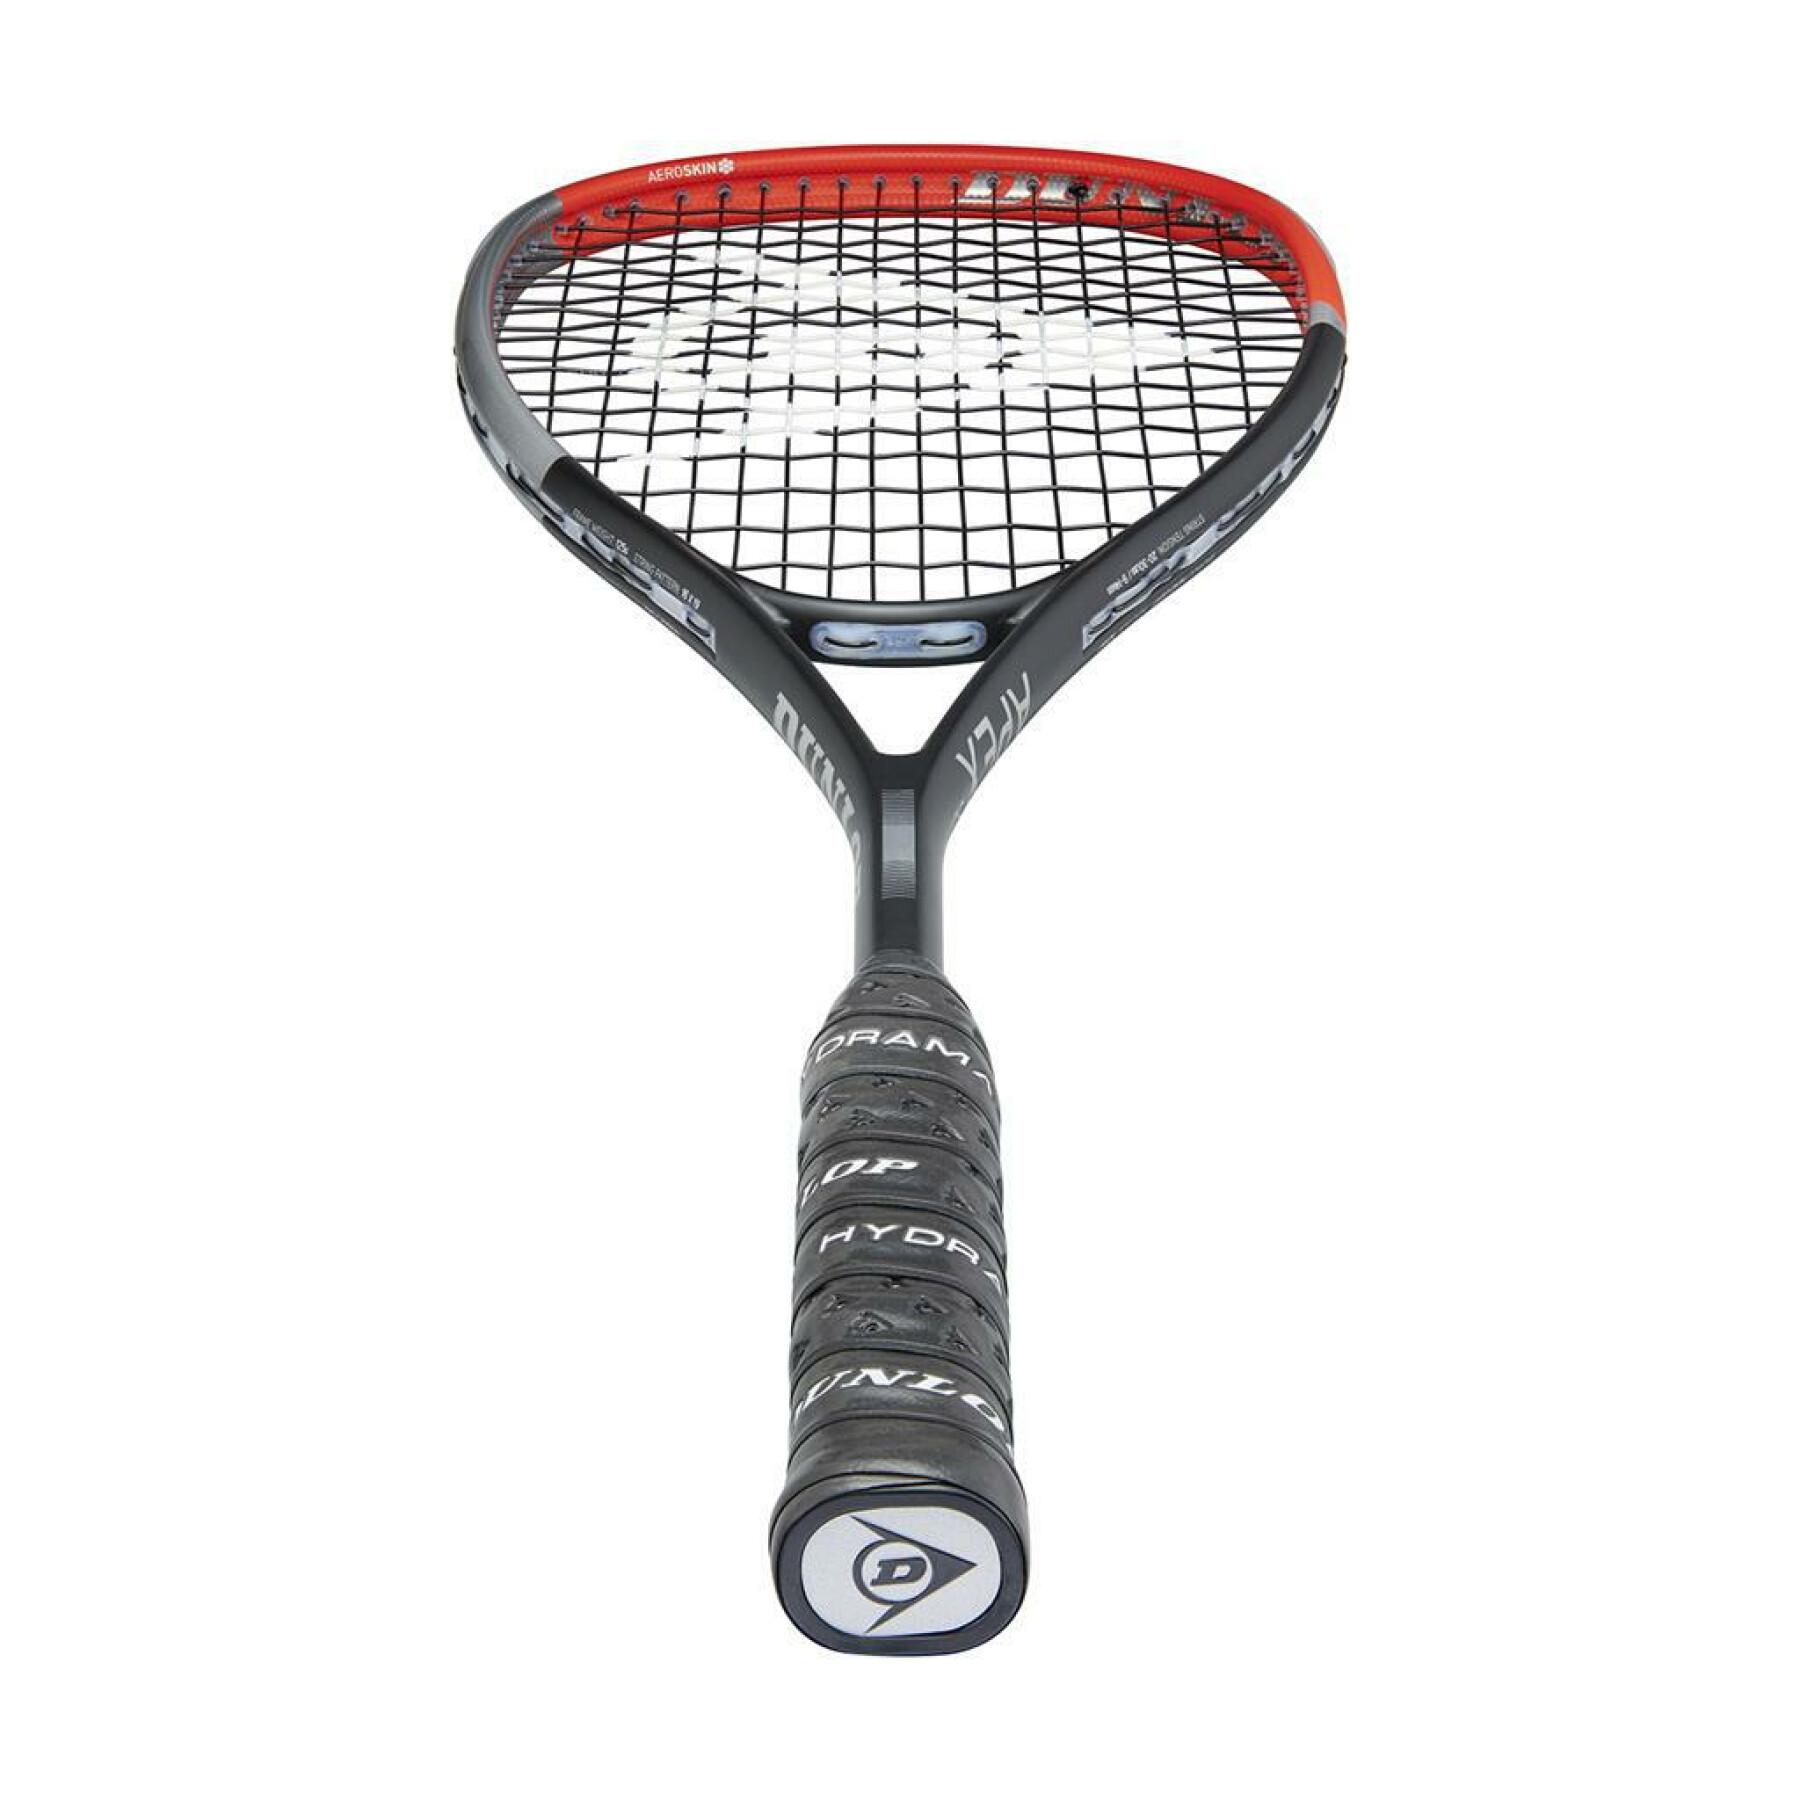 Racket Dunlop apex supreme 5.0